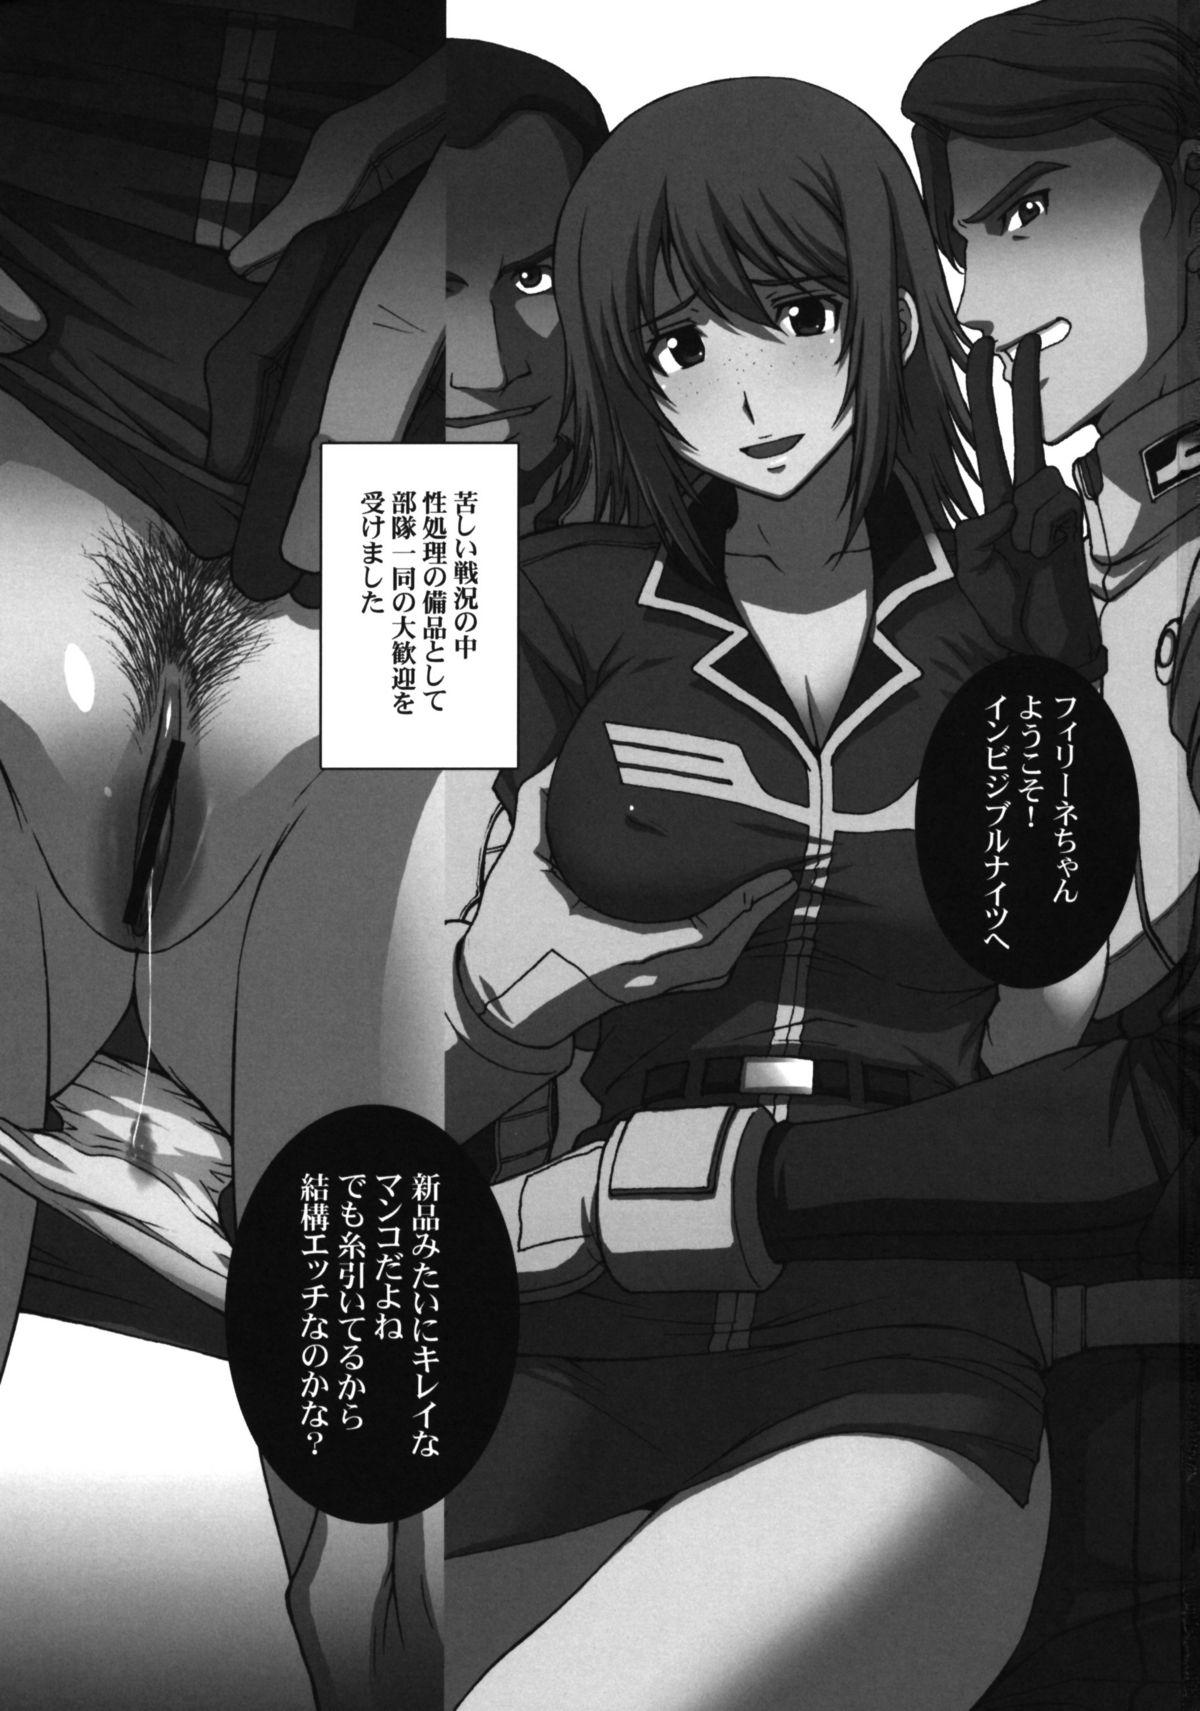 Alone ZEON LostWarChronicles "Invisible Knights no Nichijou" & "Elran Kanraku." - Gundam Mobile suit gundam lost war chronicles Imvu - Page 2